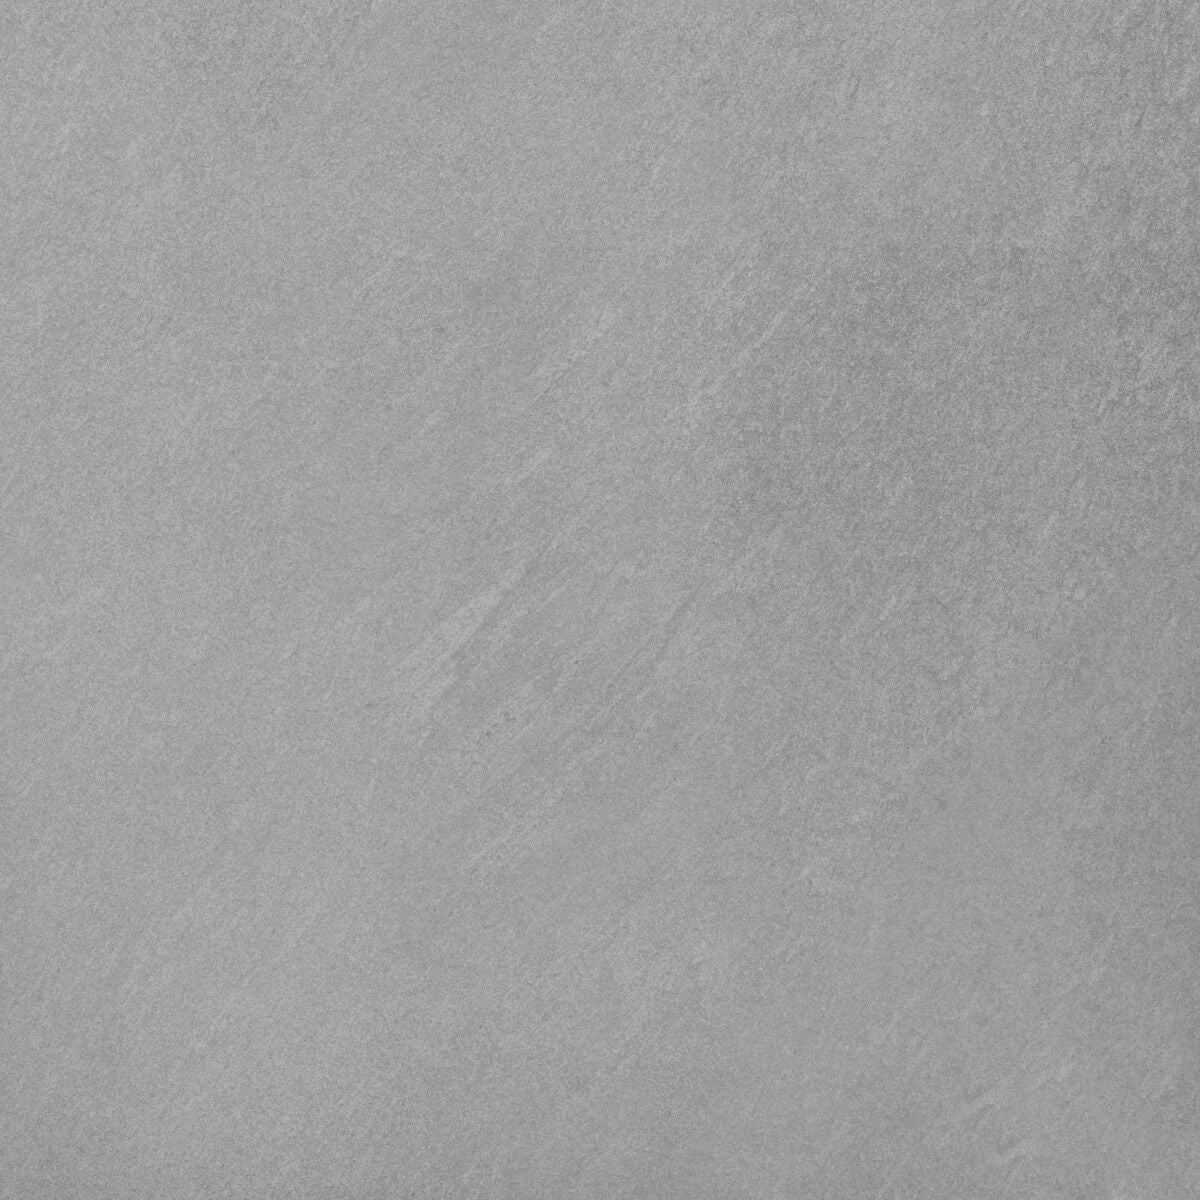 Verona Definitive Kynance Grey Matt Porcelain Wall & Floor Tile 50x50cm